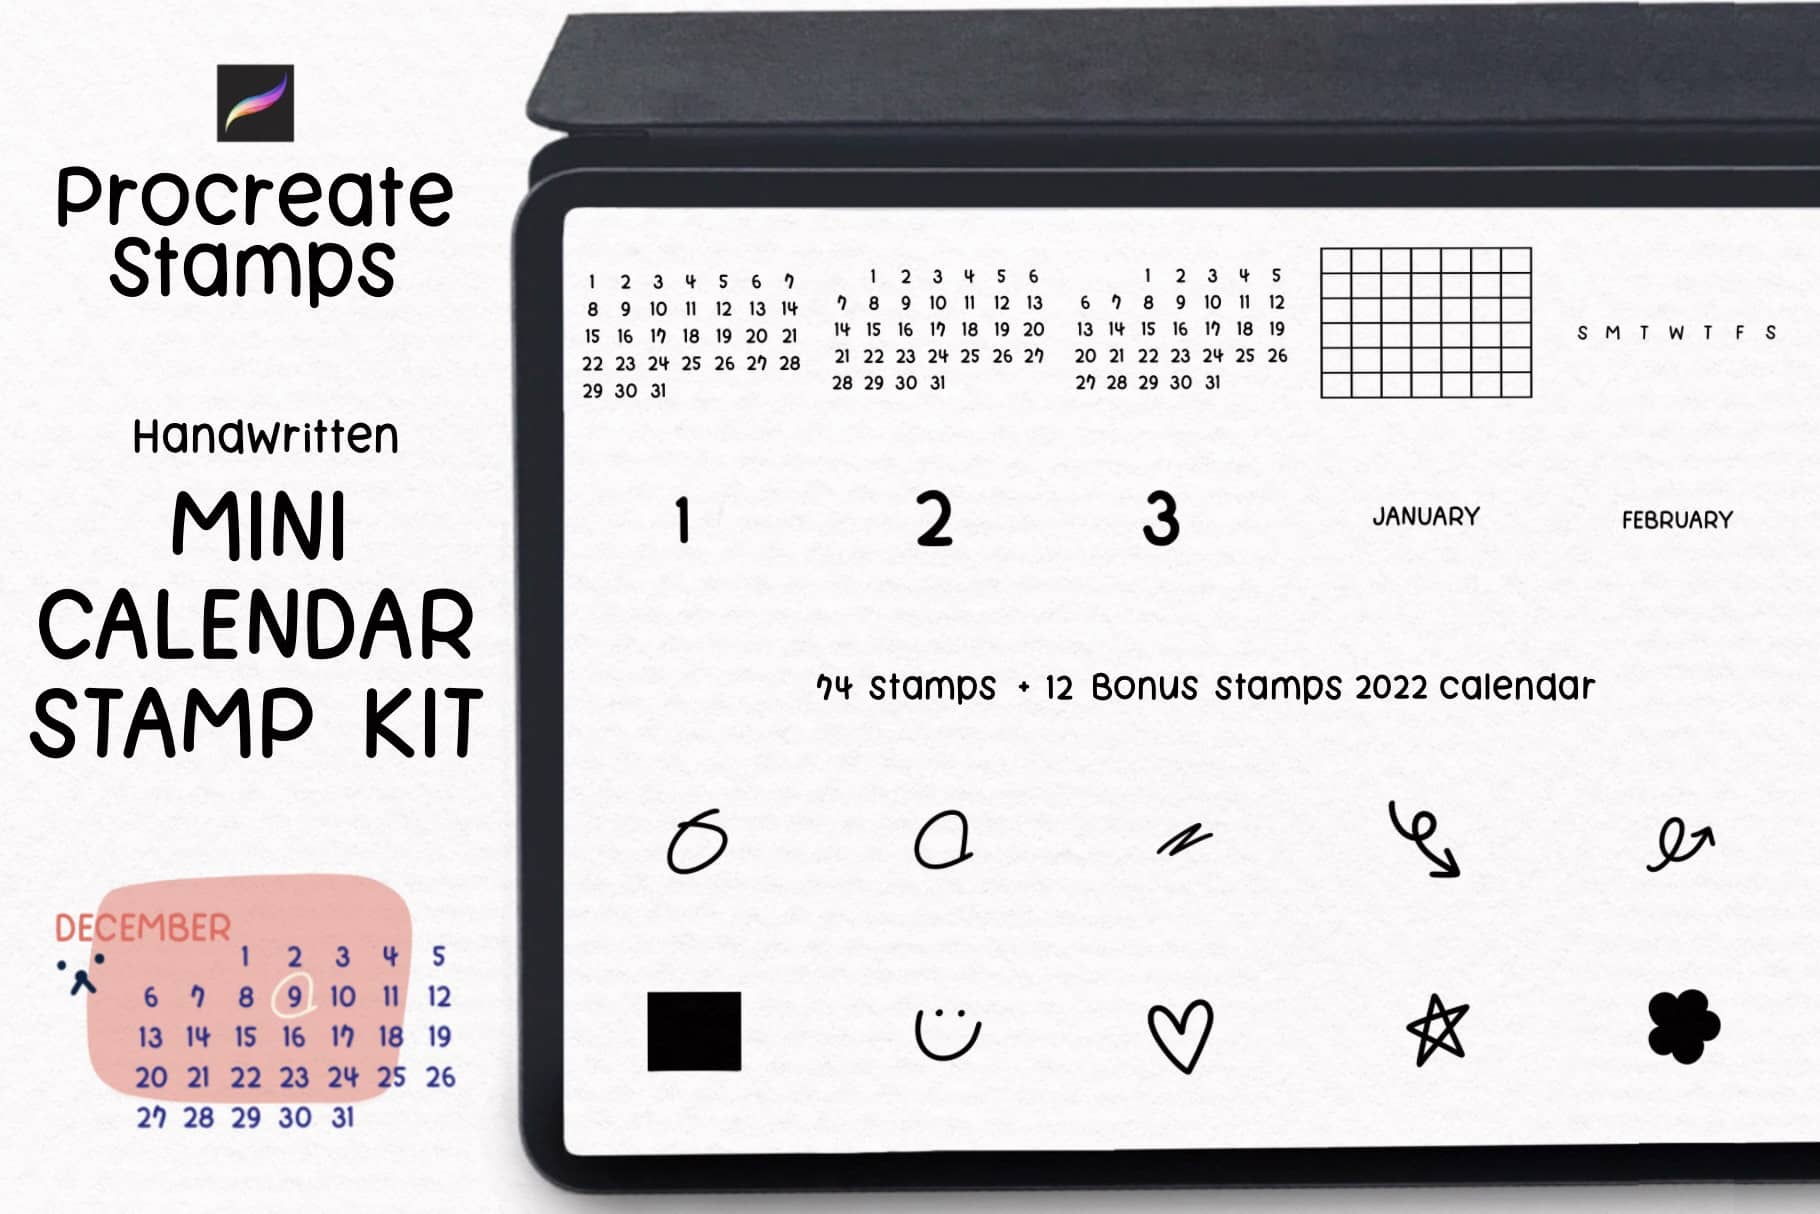 Handwritten Calendar Kit1 Procreate Stamps